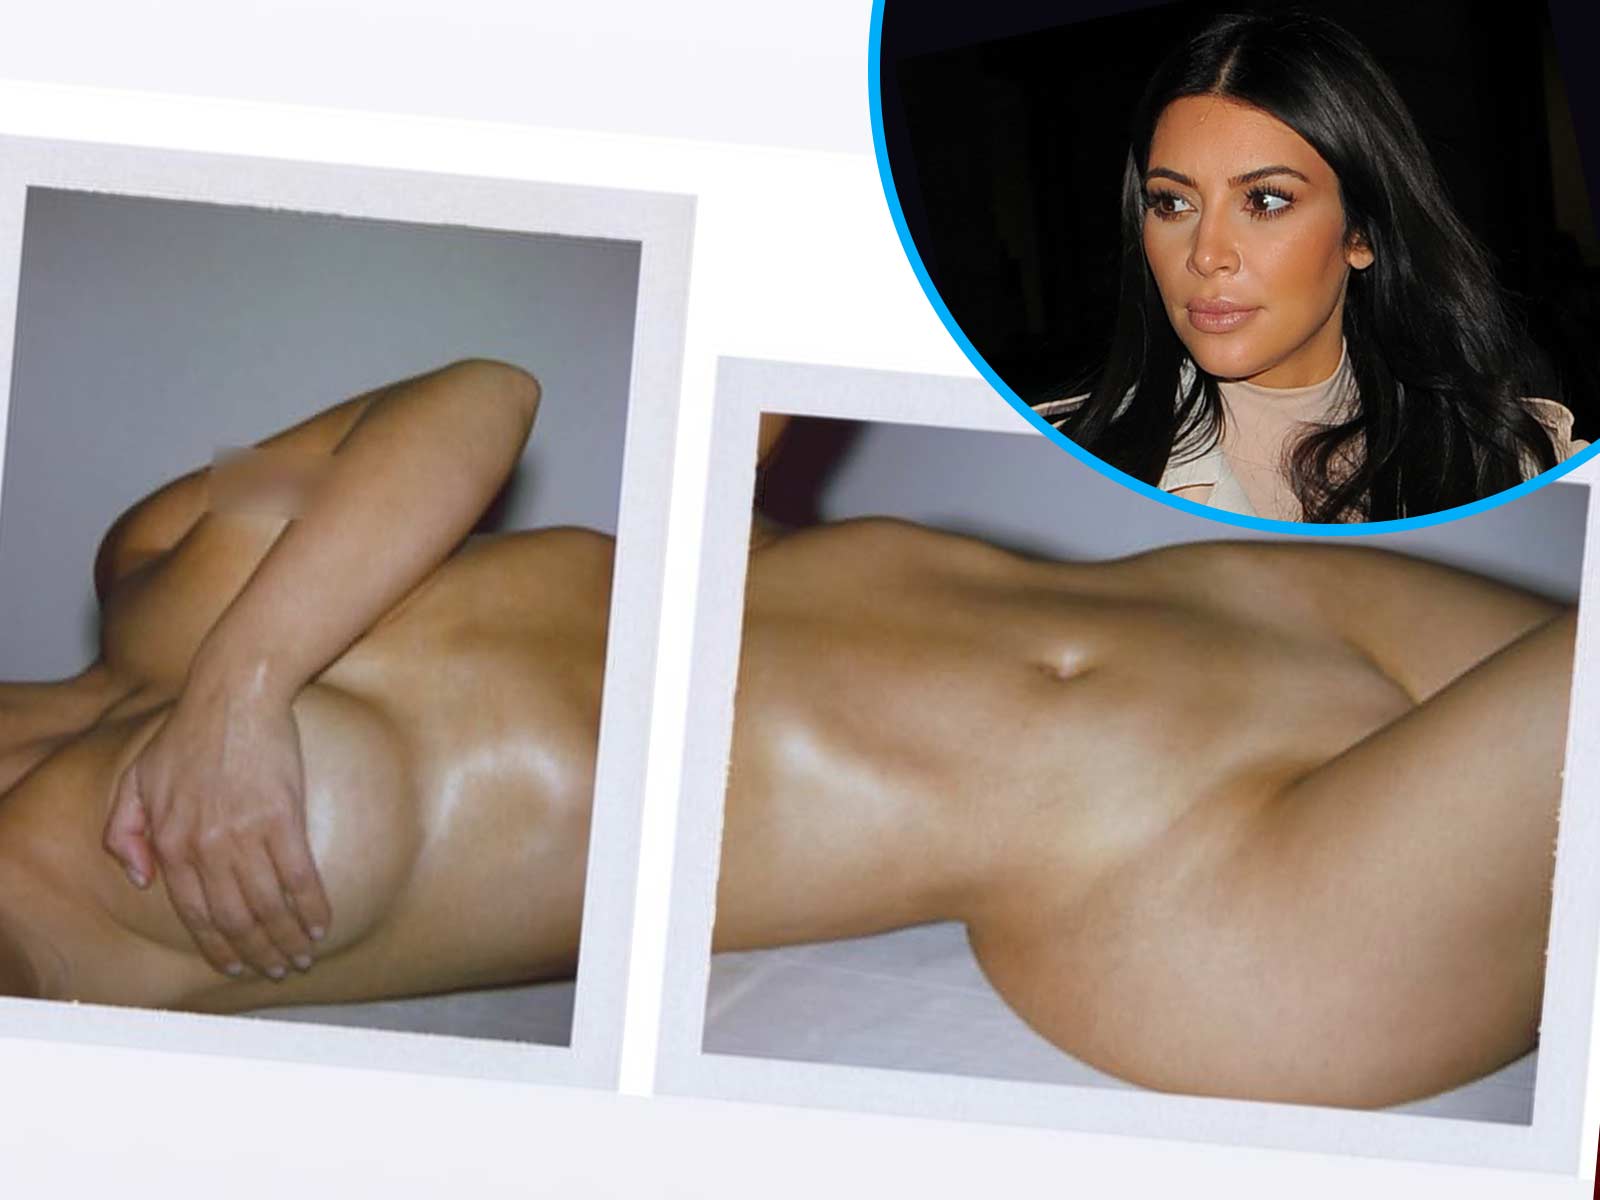 Kim kardashian shows her pussy pic